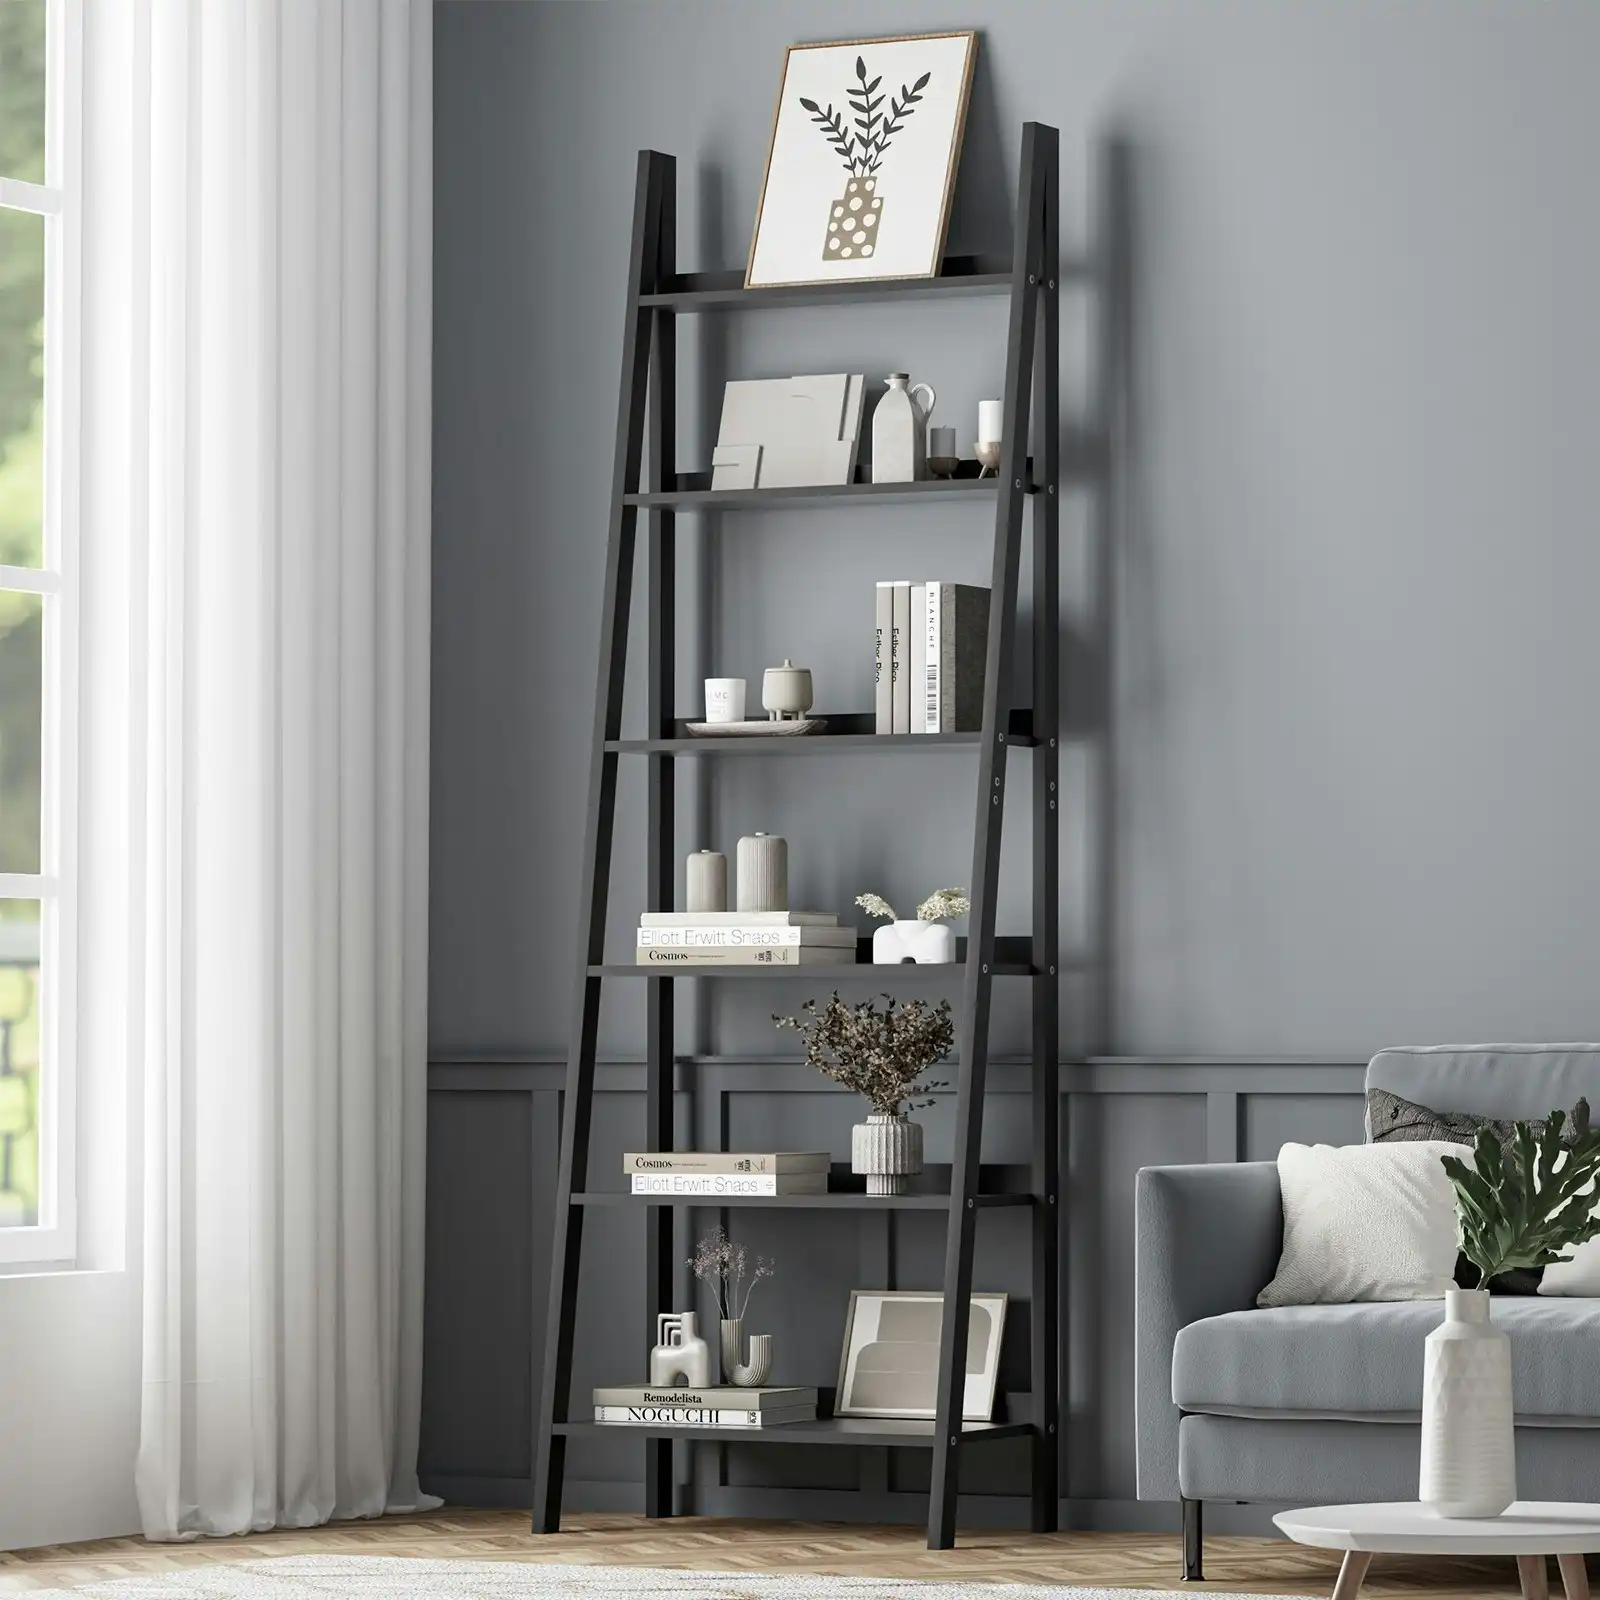 Oikiture Bookshelf 6 Tier Corner Ladder Shelf Home Storage Display Rack Black